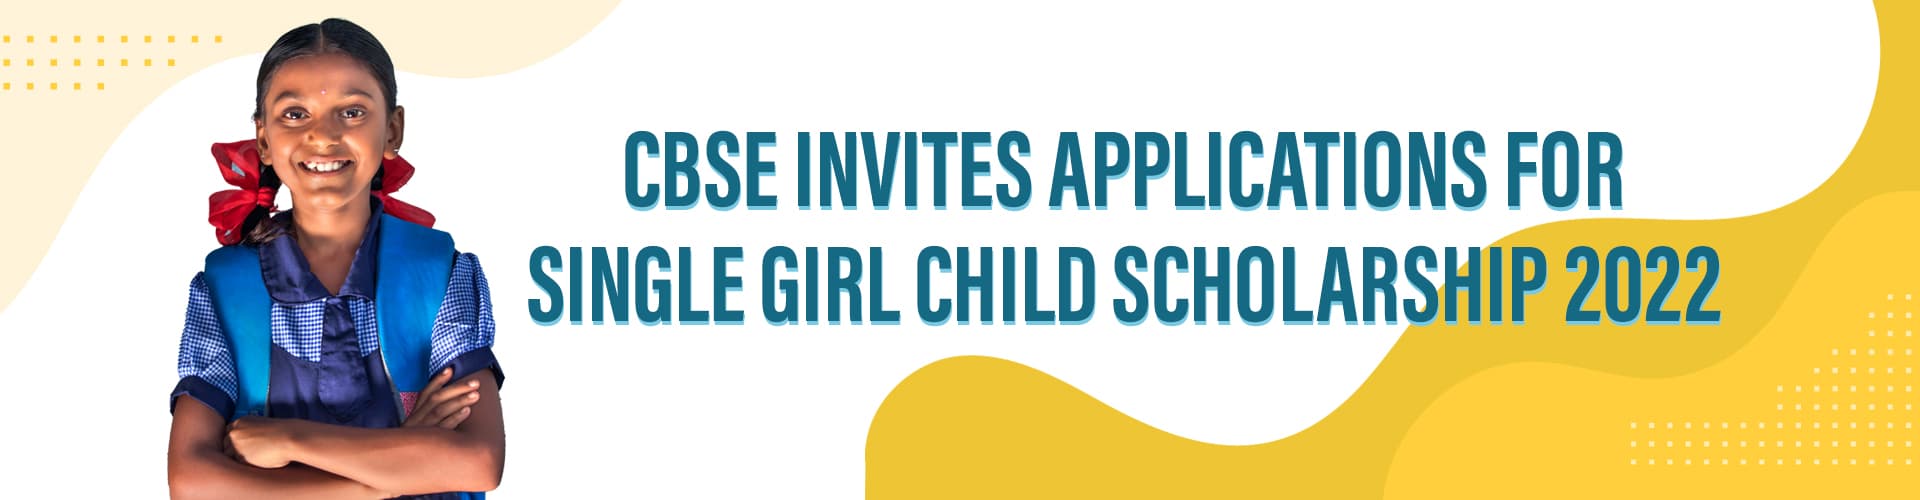 CBSE Invites Applications For Single Girl Child Scholarship 2022